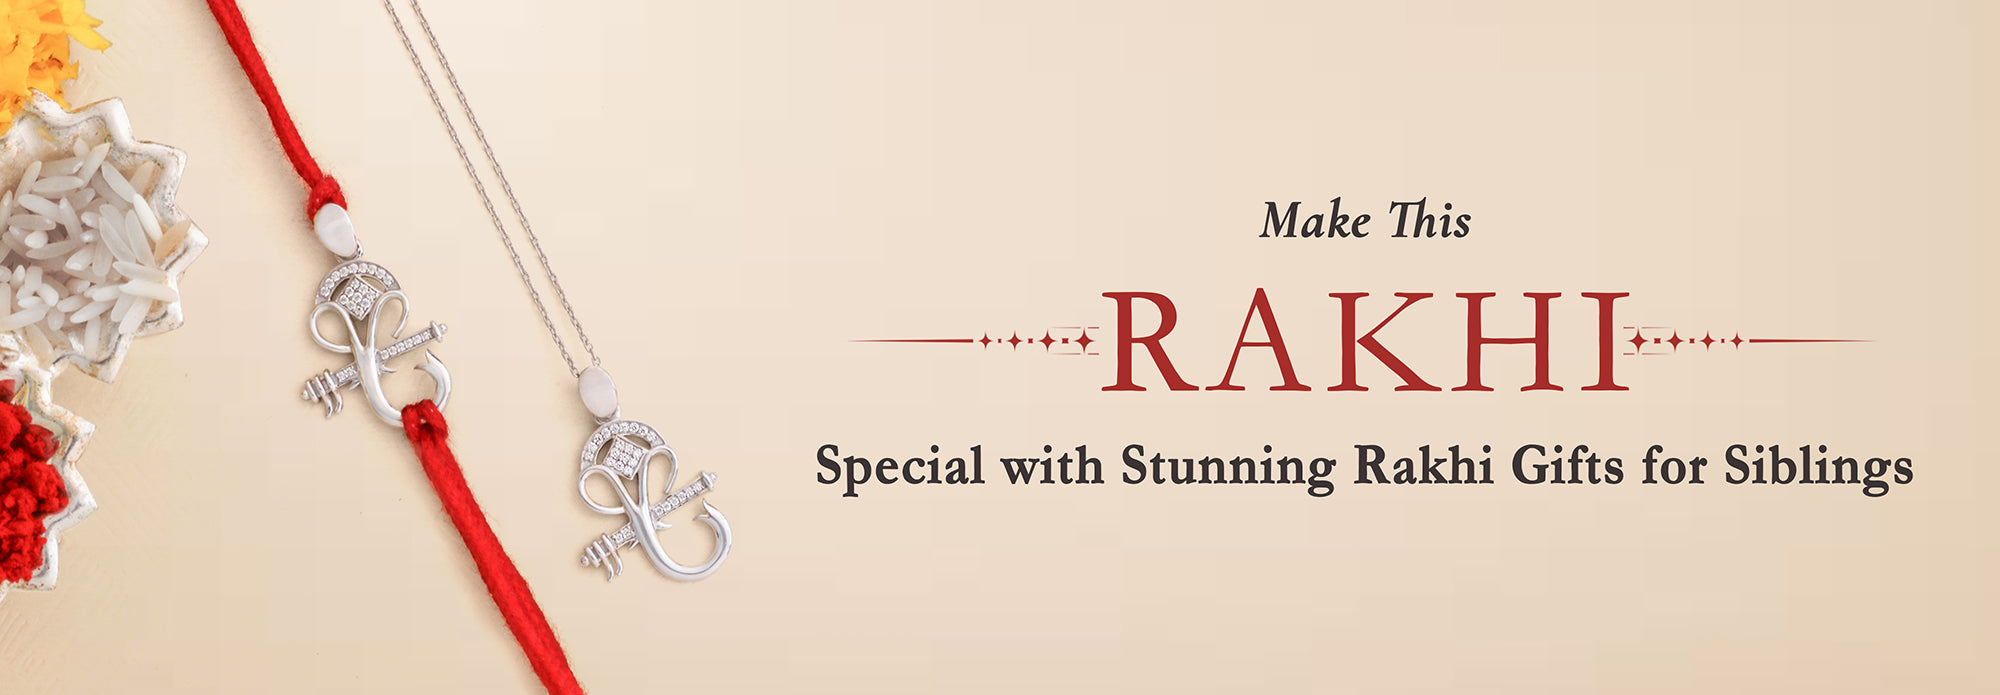 Make this Rakhi Special with Stunning Rakhi Gifts for Siblings